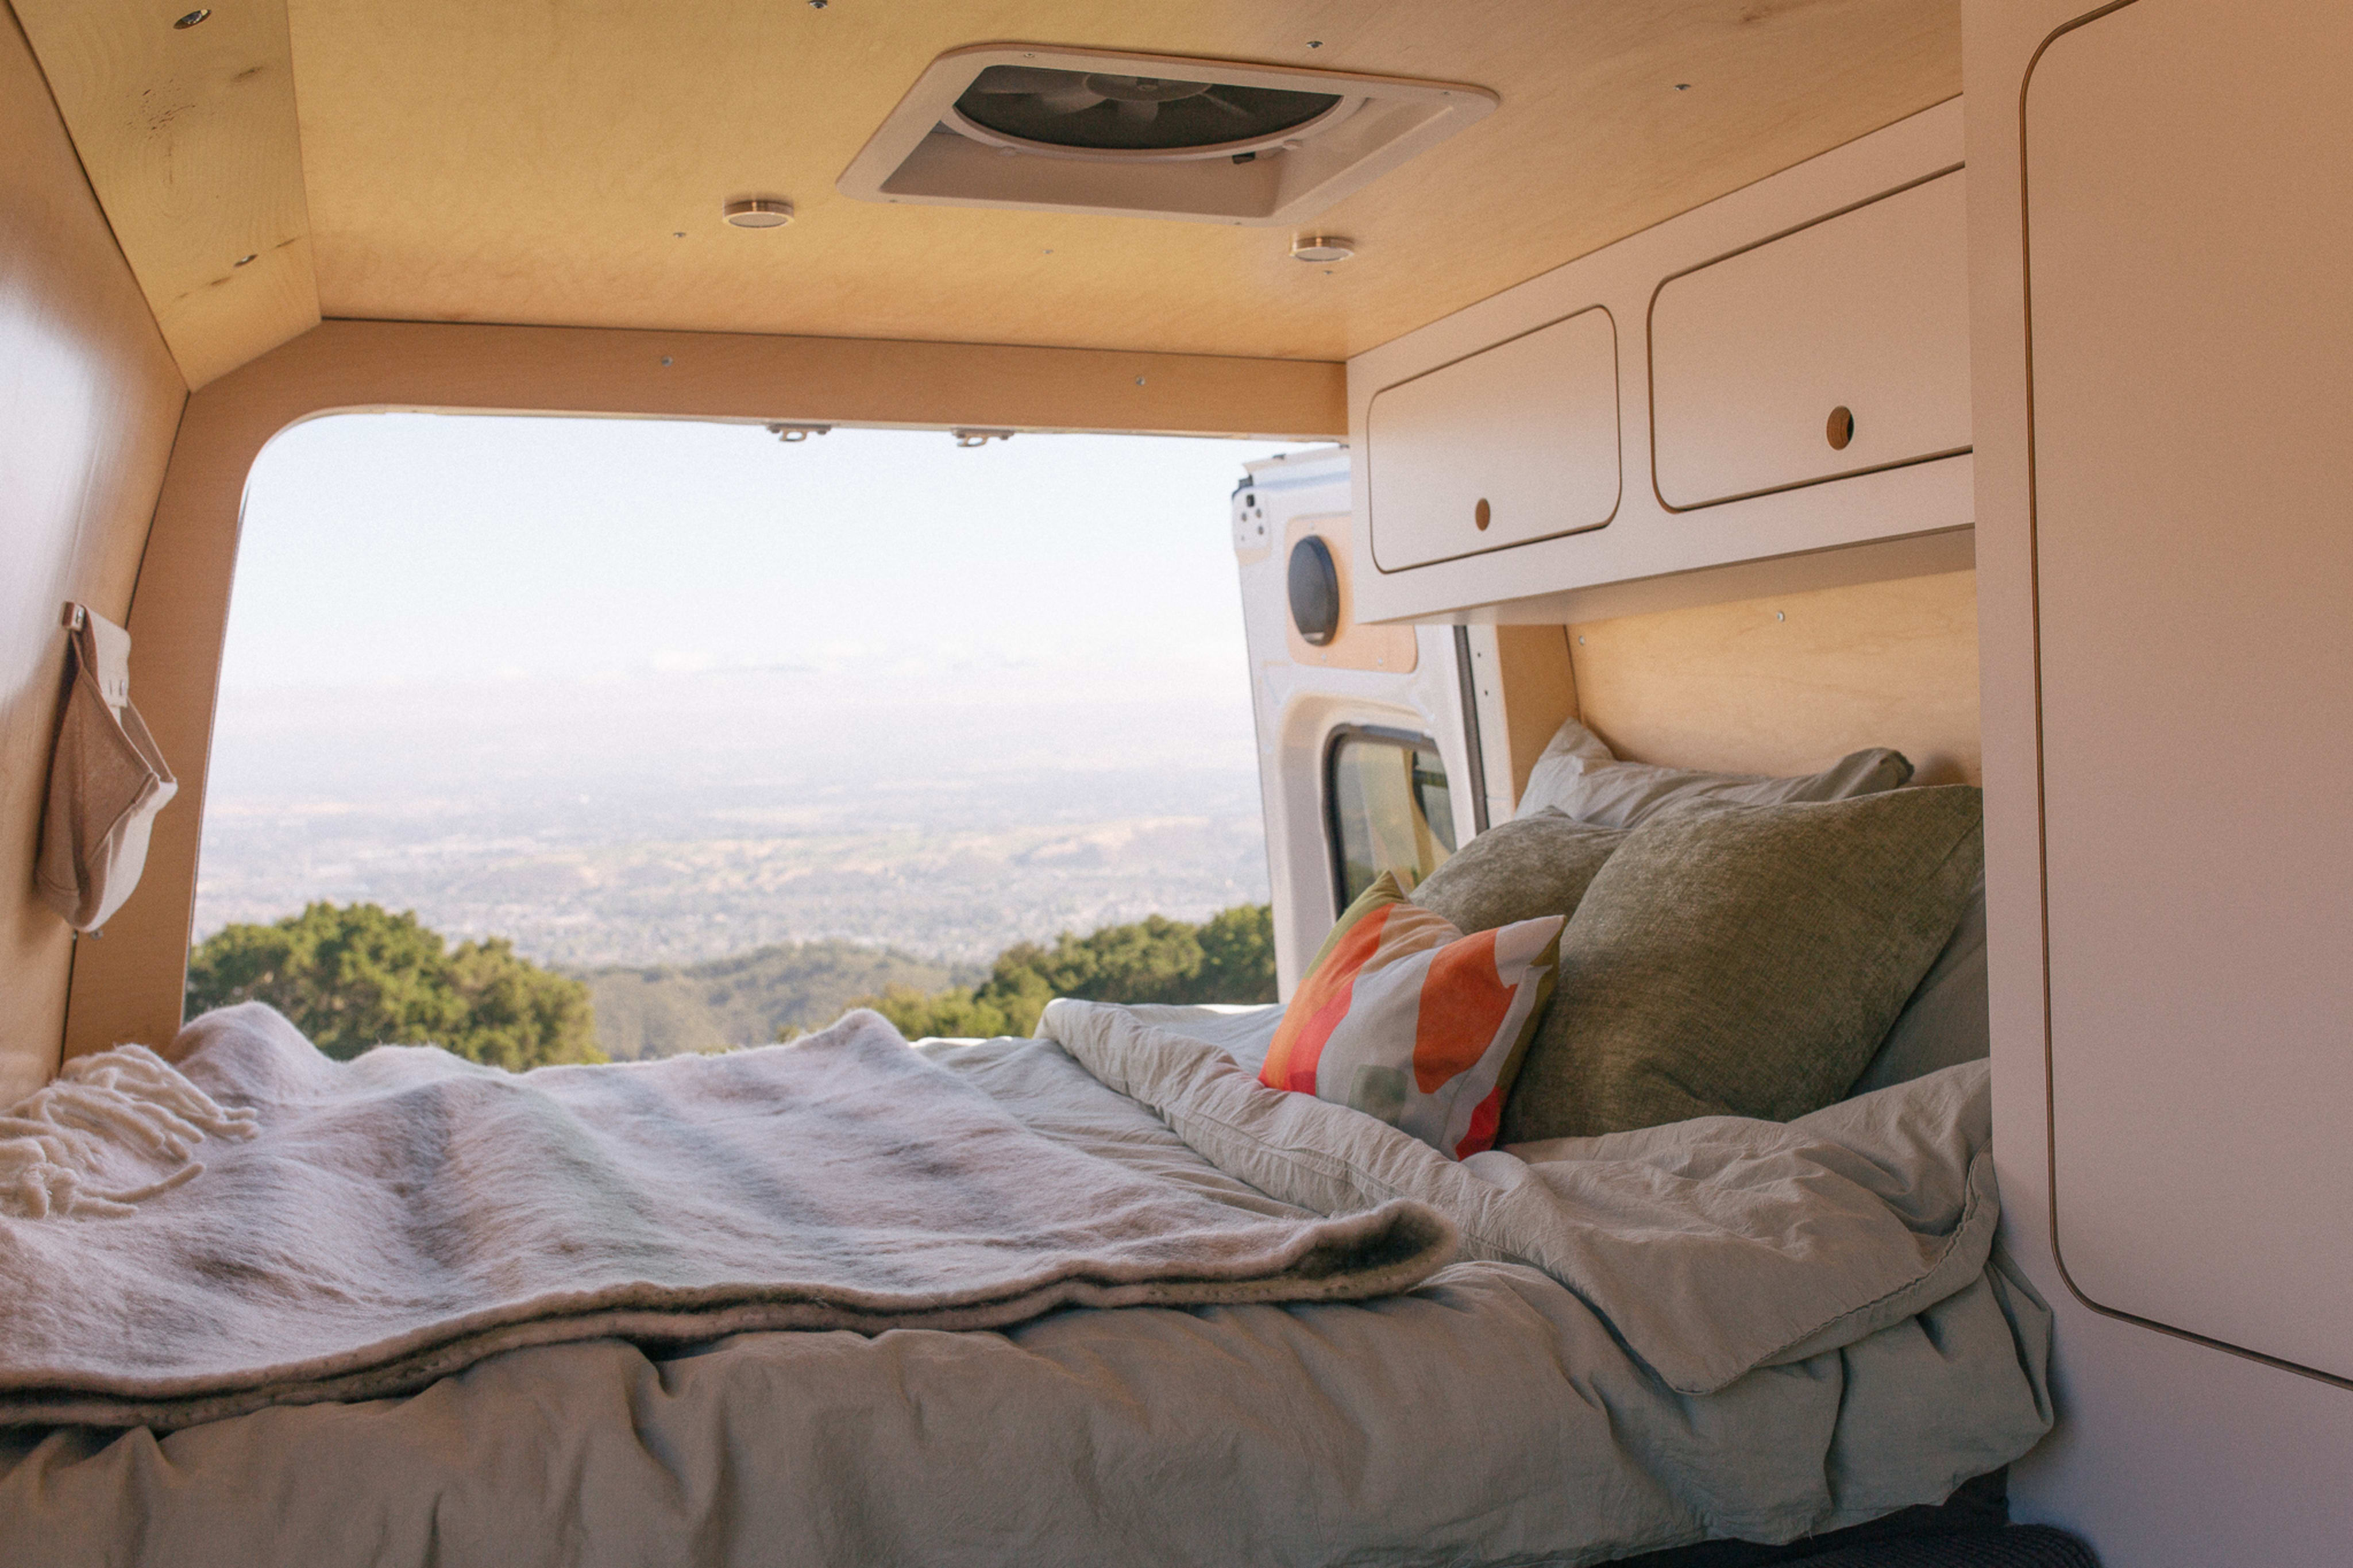 A campervan road trip in California